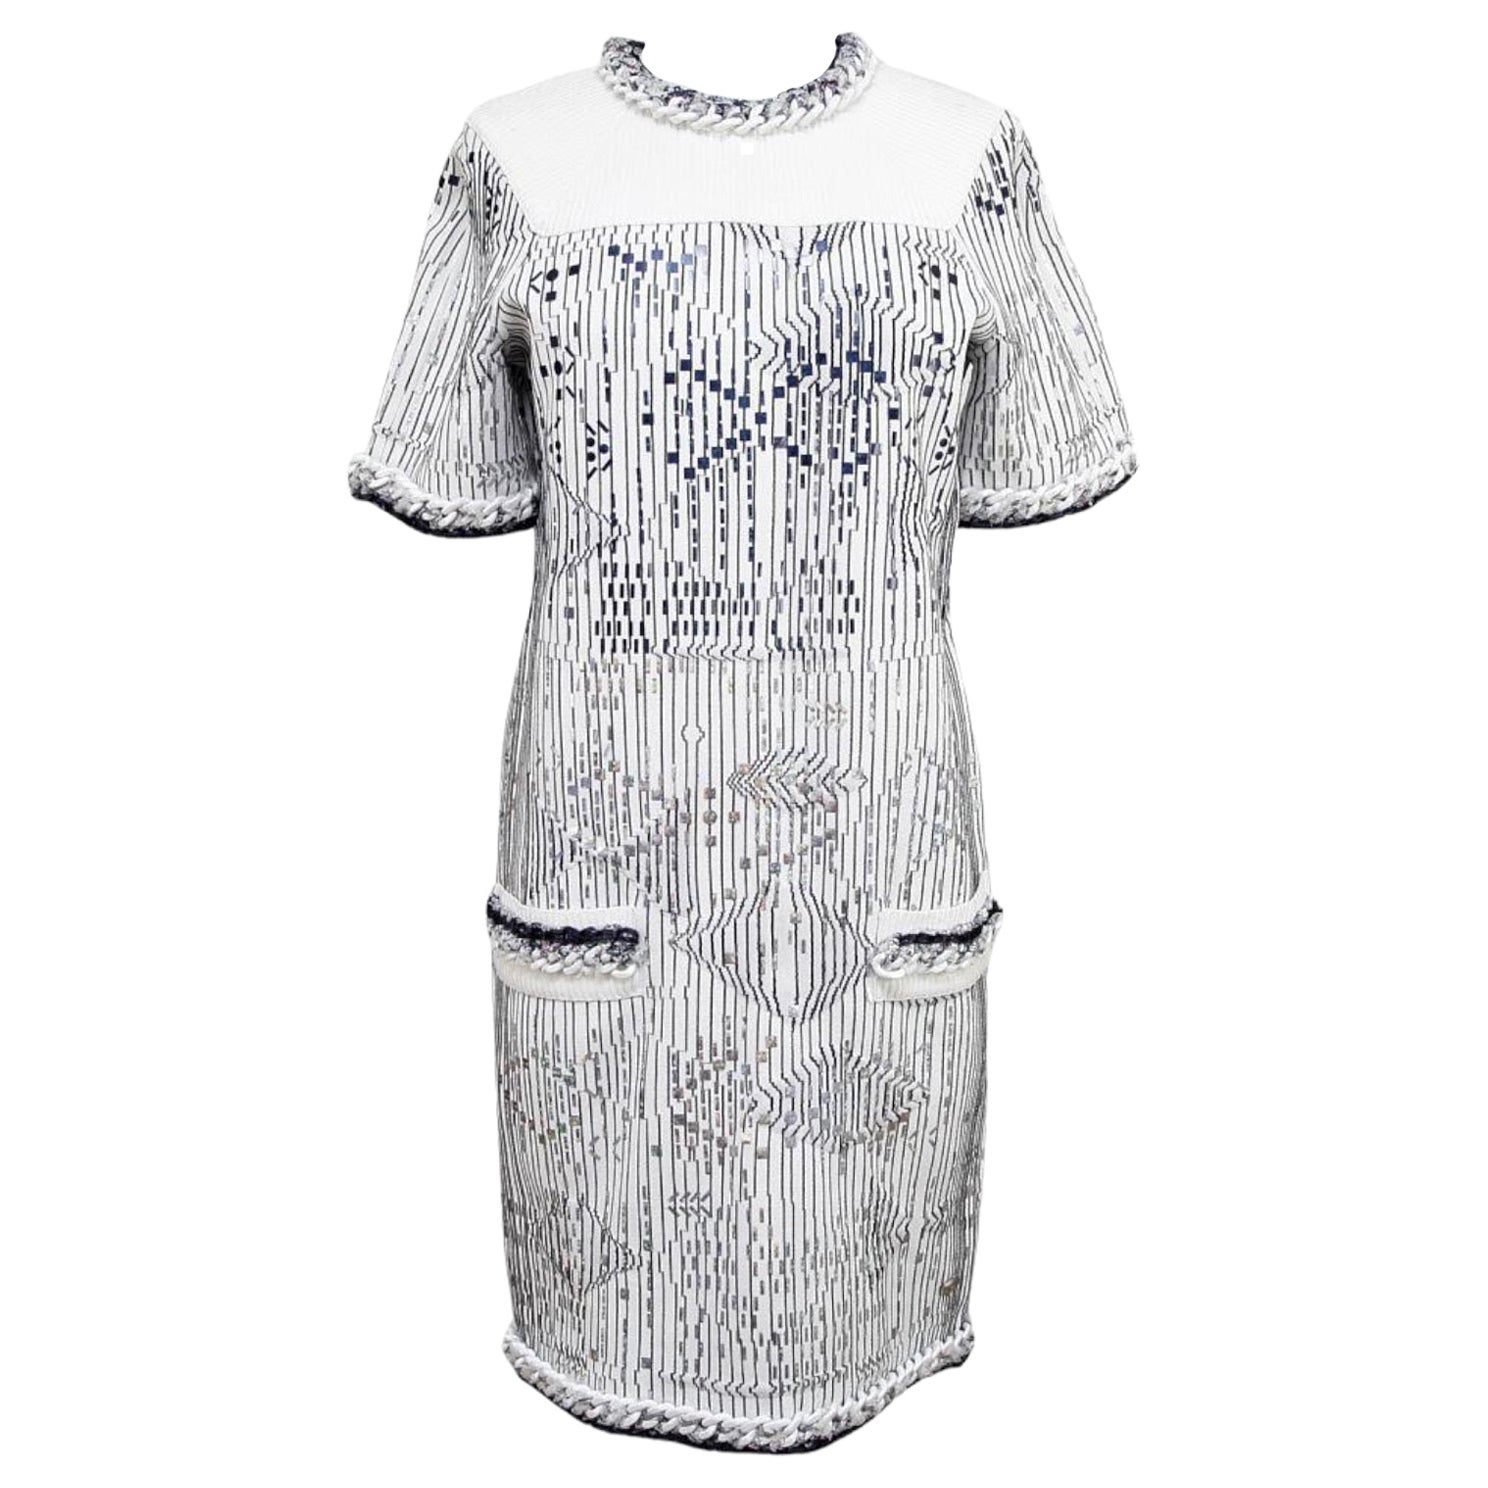 CHANEL Sweater Dress White Knit Metallic Short Sleeve Silver Blue 14S 2014 Sz 40 For Sale